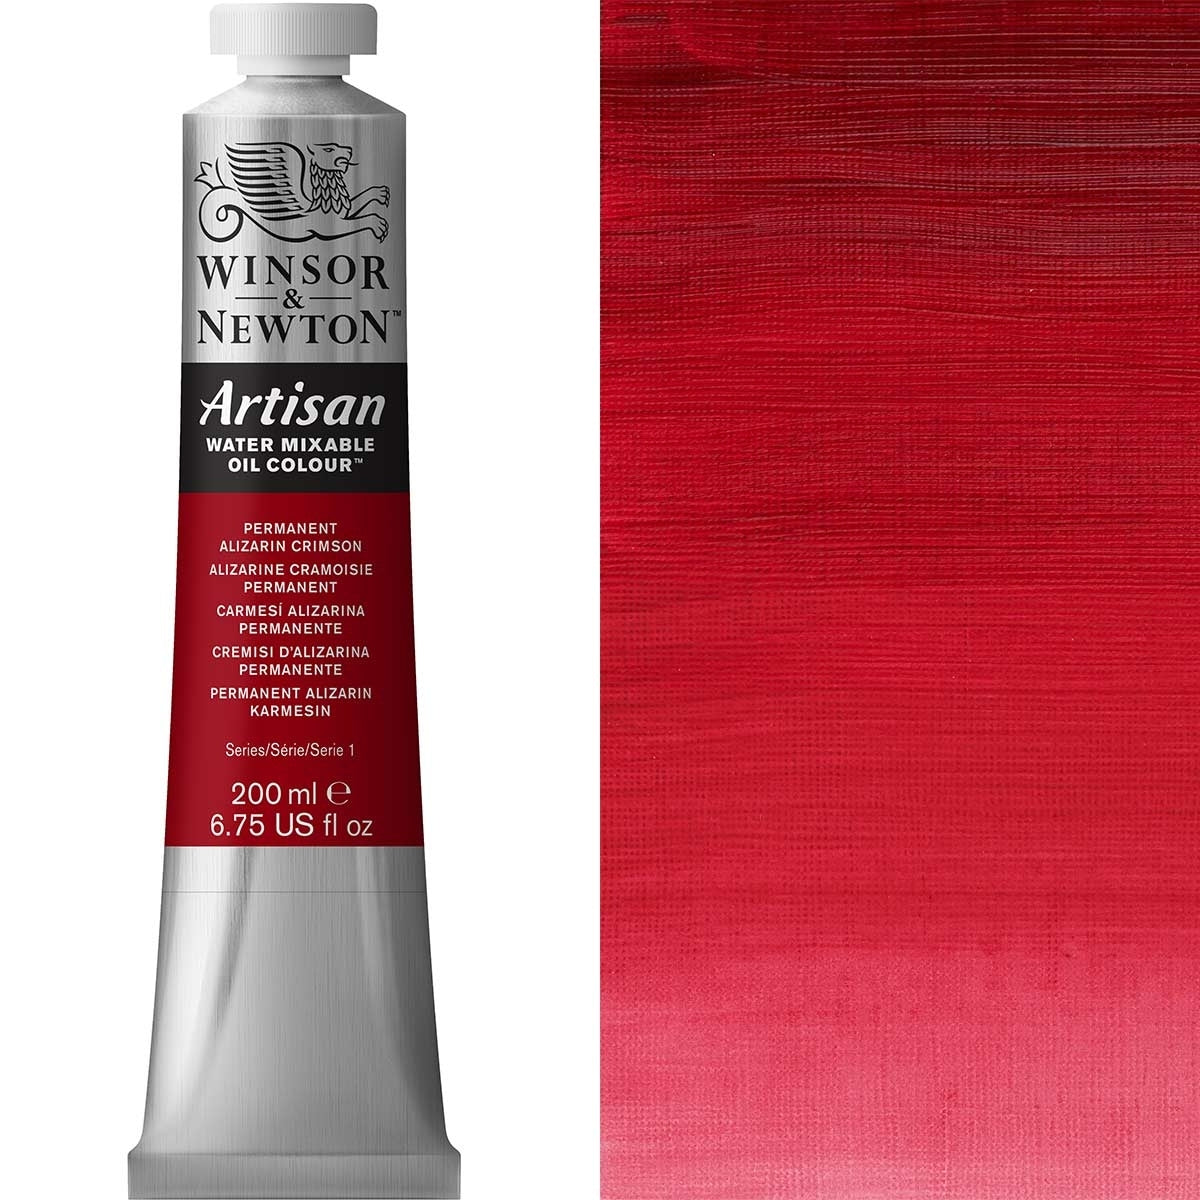 Winsor and Newton - Artisan Oil Colour Watermixable - 200ml - Permanent Alizarin Crimson